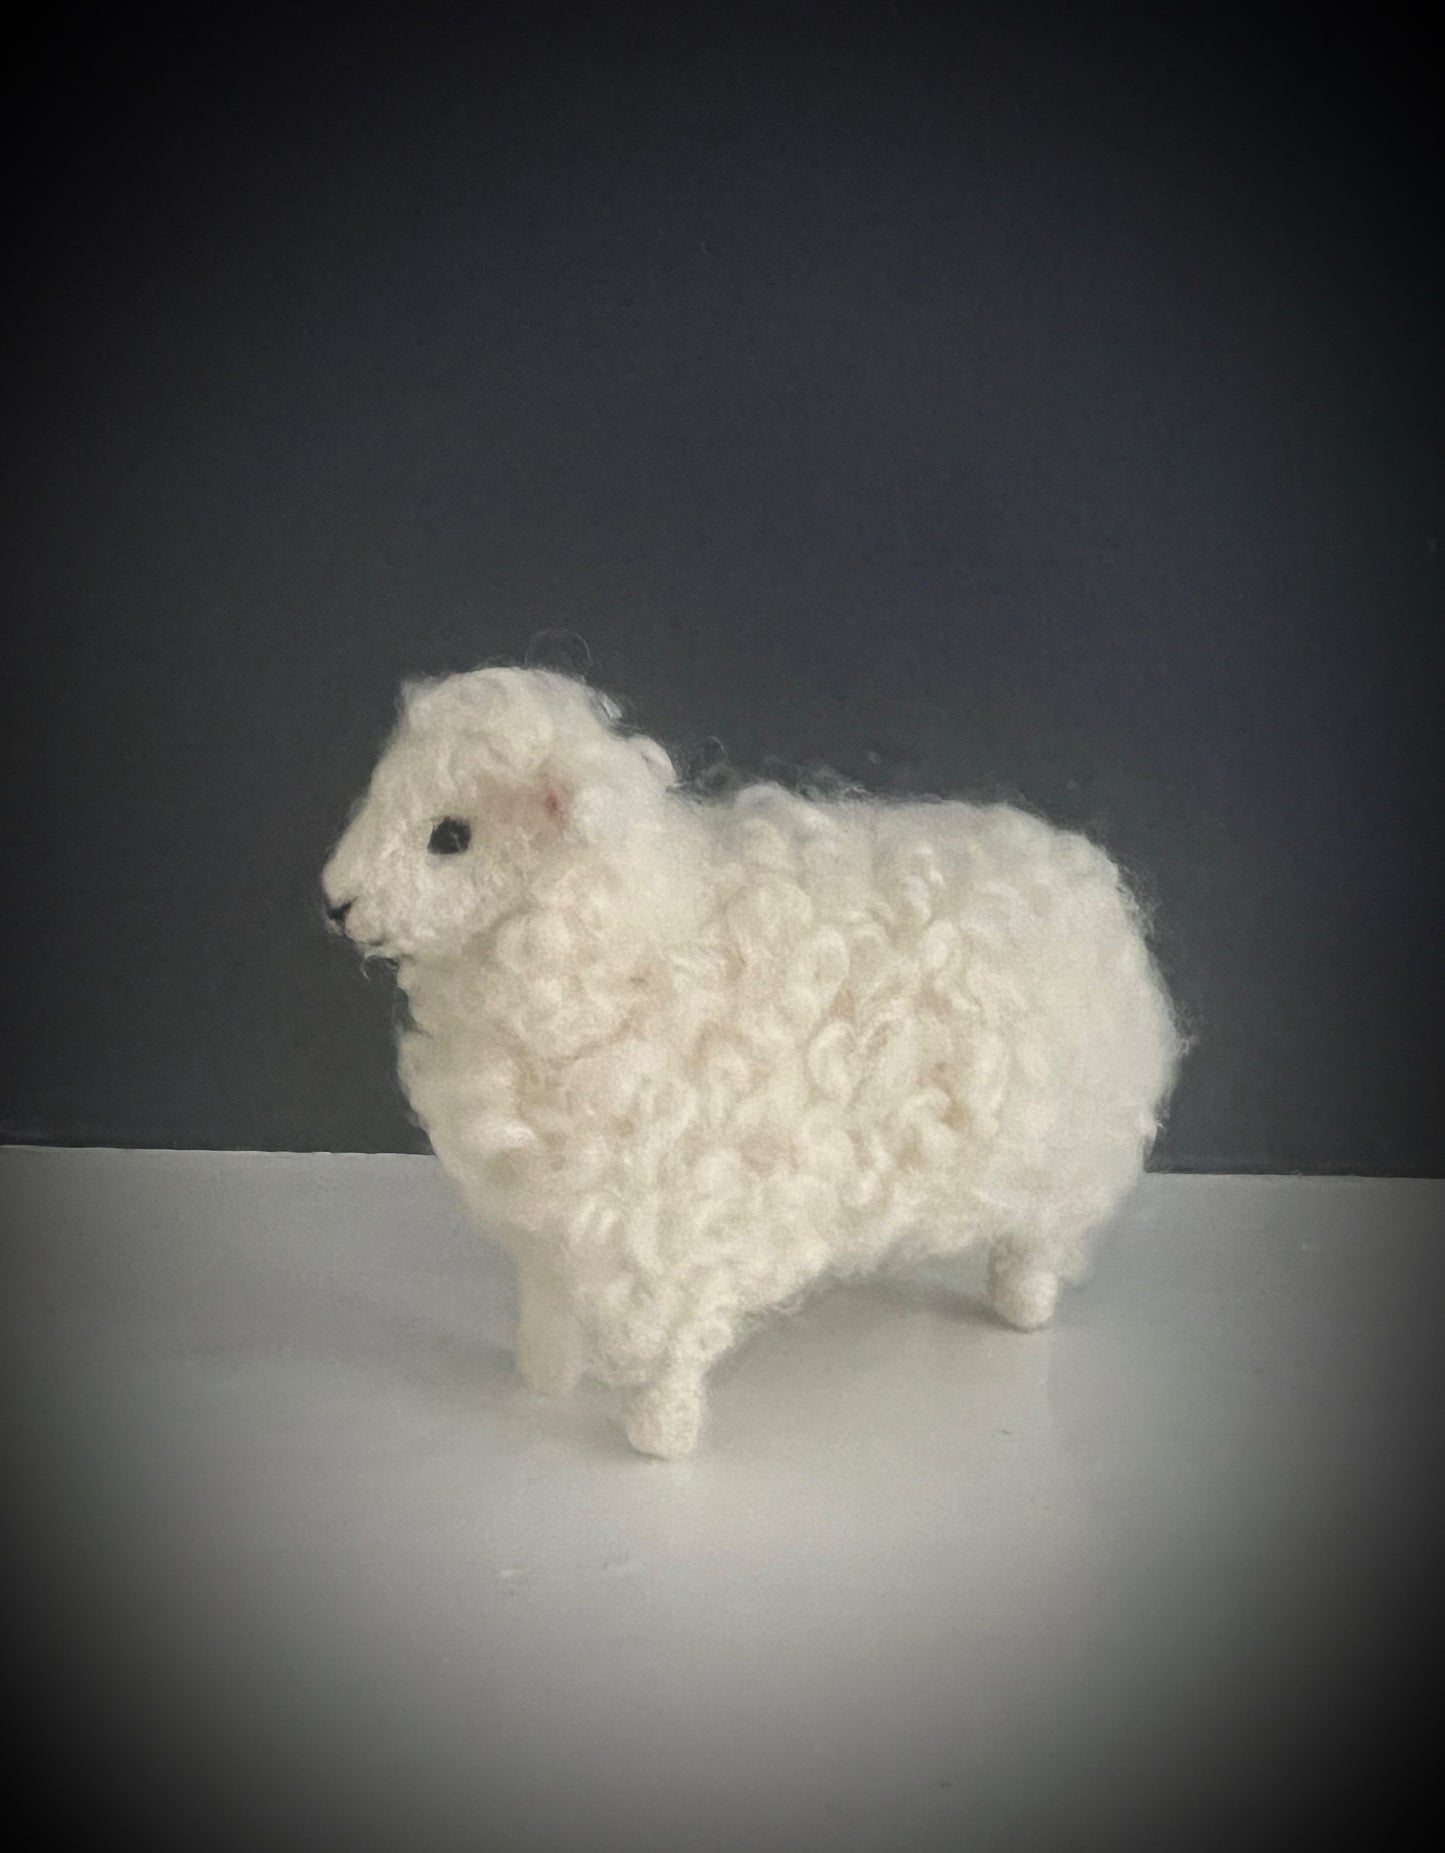 Curly Sheep